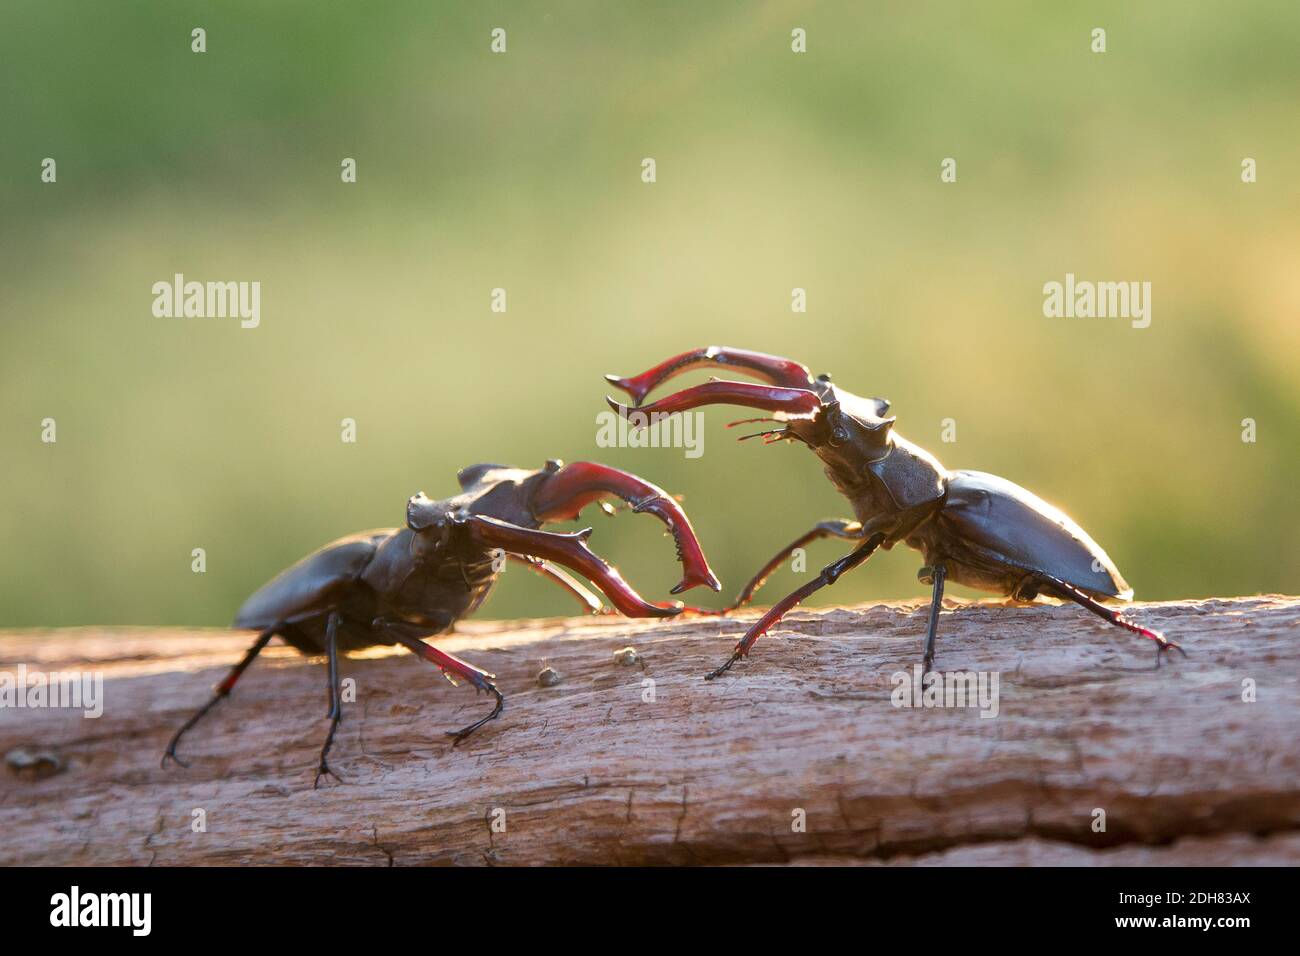 stag beetle, European stag beetle (Lucanus cervus), threatening gestures of two males, Netherlands Stock Photo